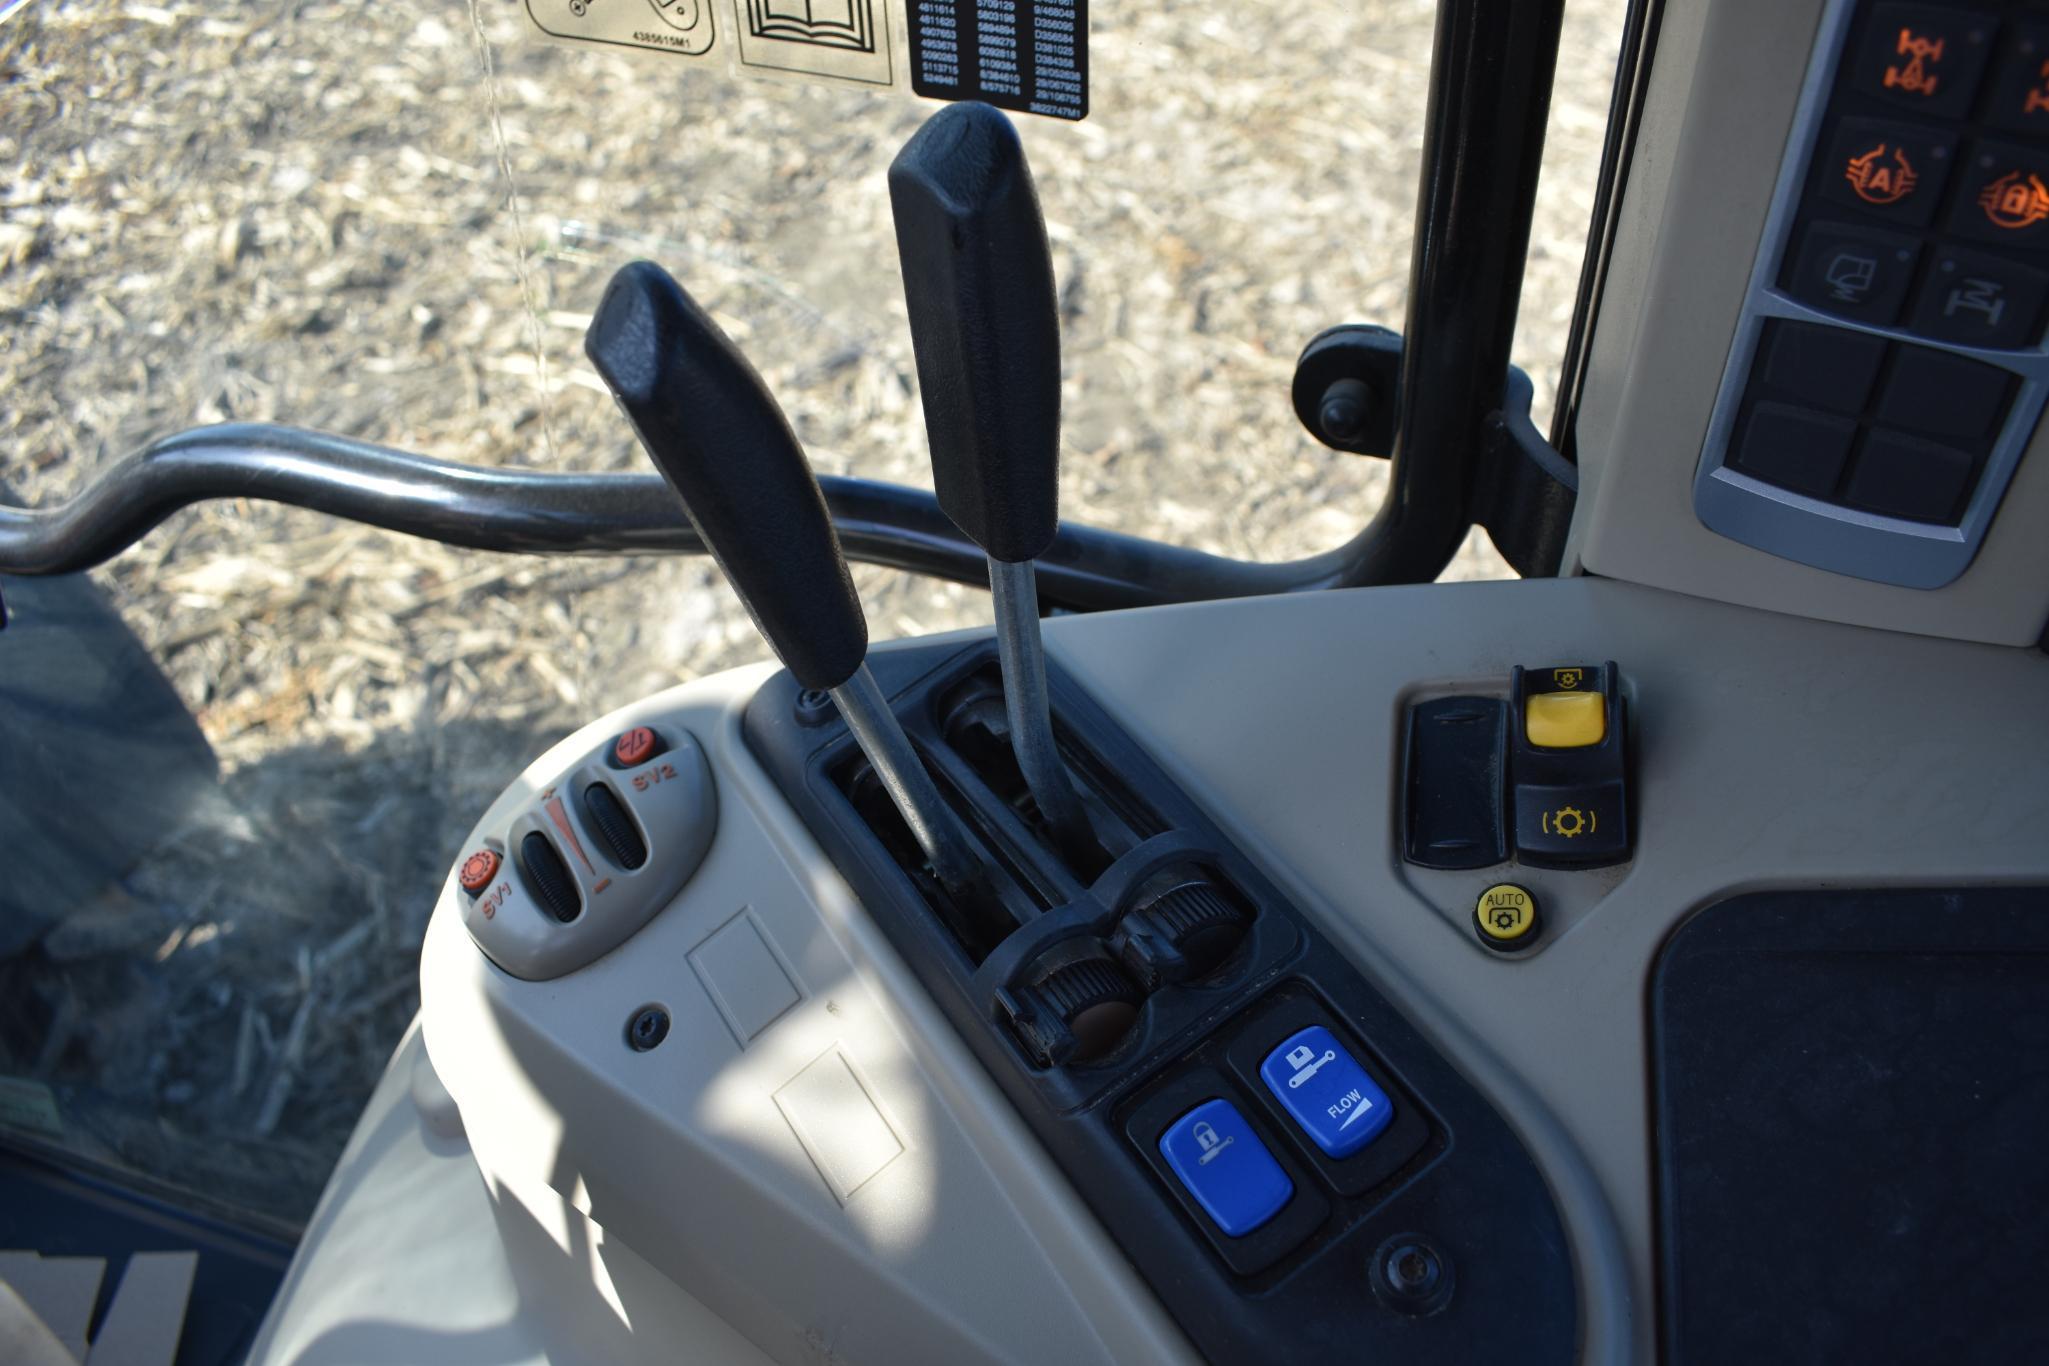 2015 Massey Ferguson 5611 MFWD tractor